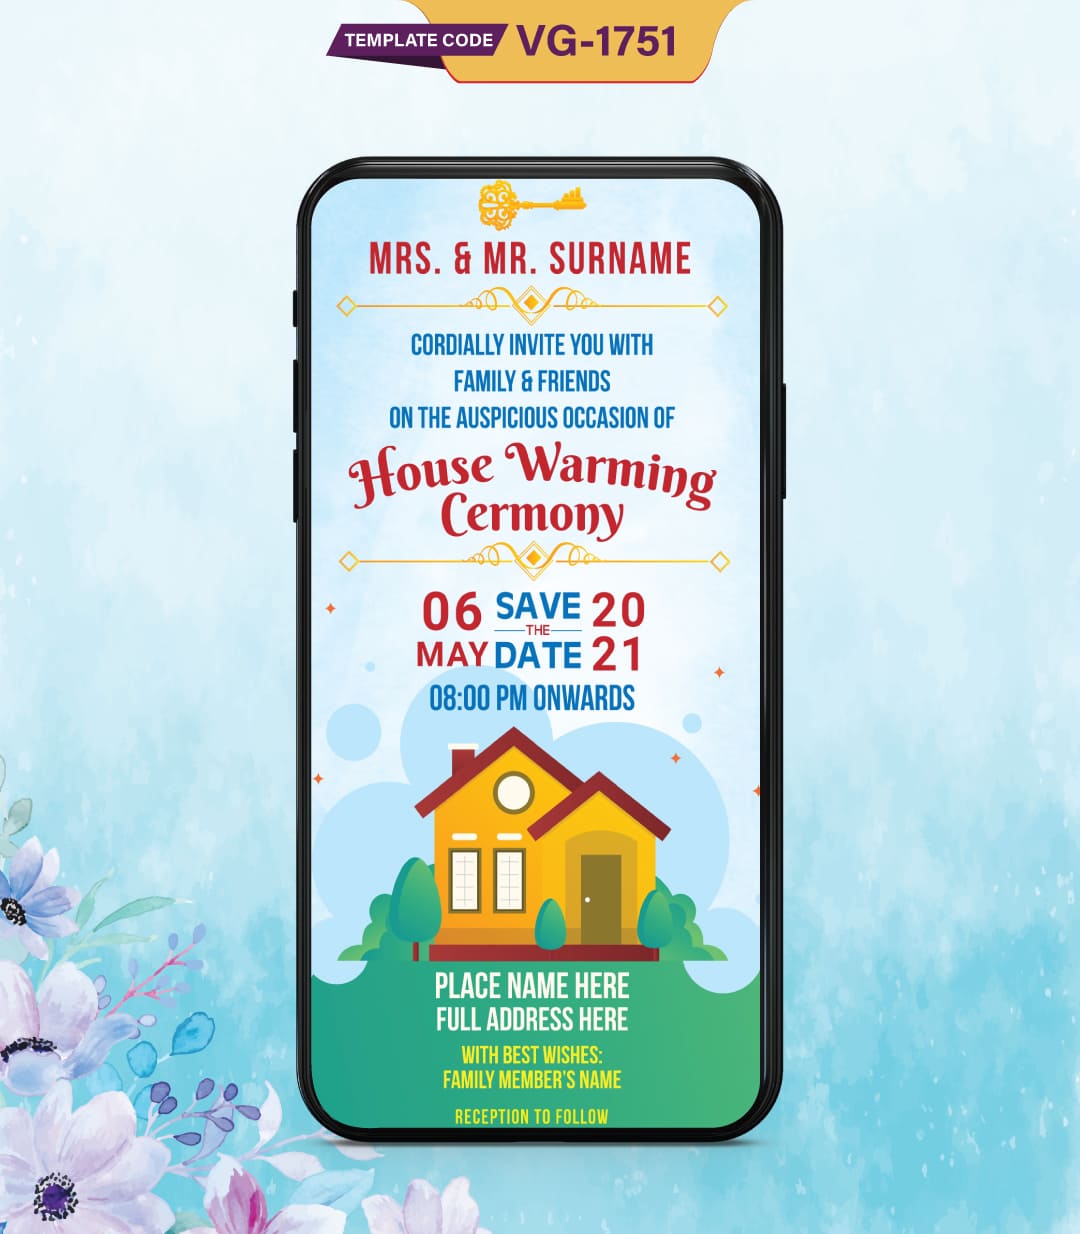 House Warming Ceremony Invitation Card - Housewarming Invite Card